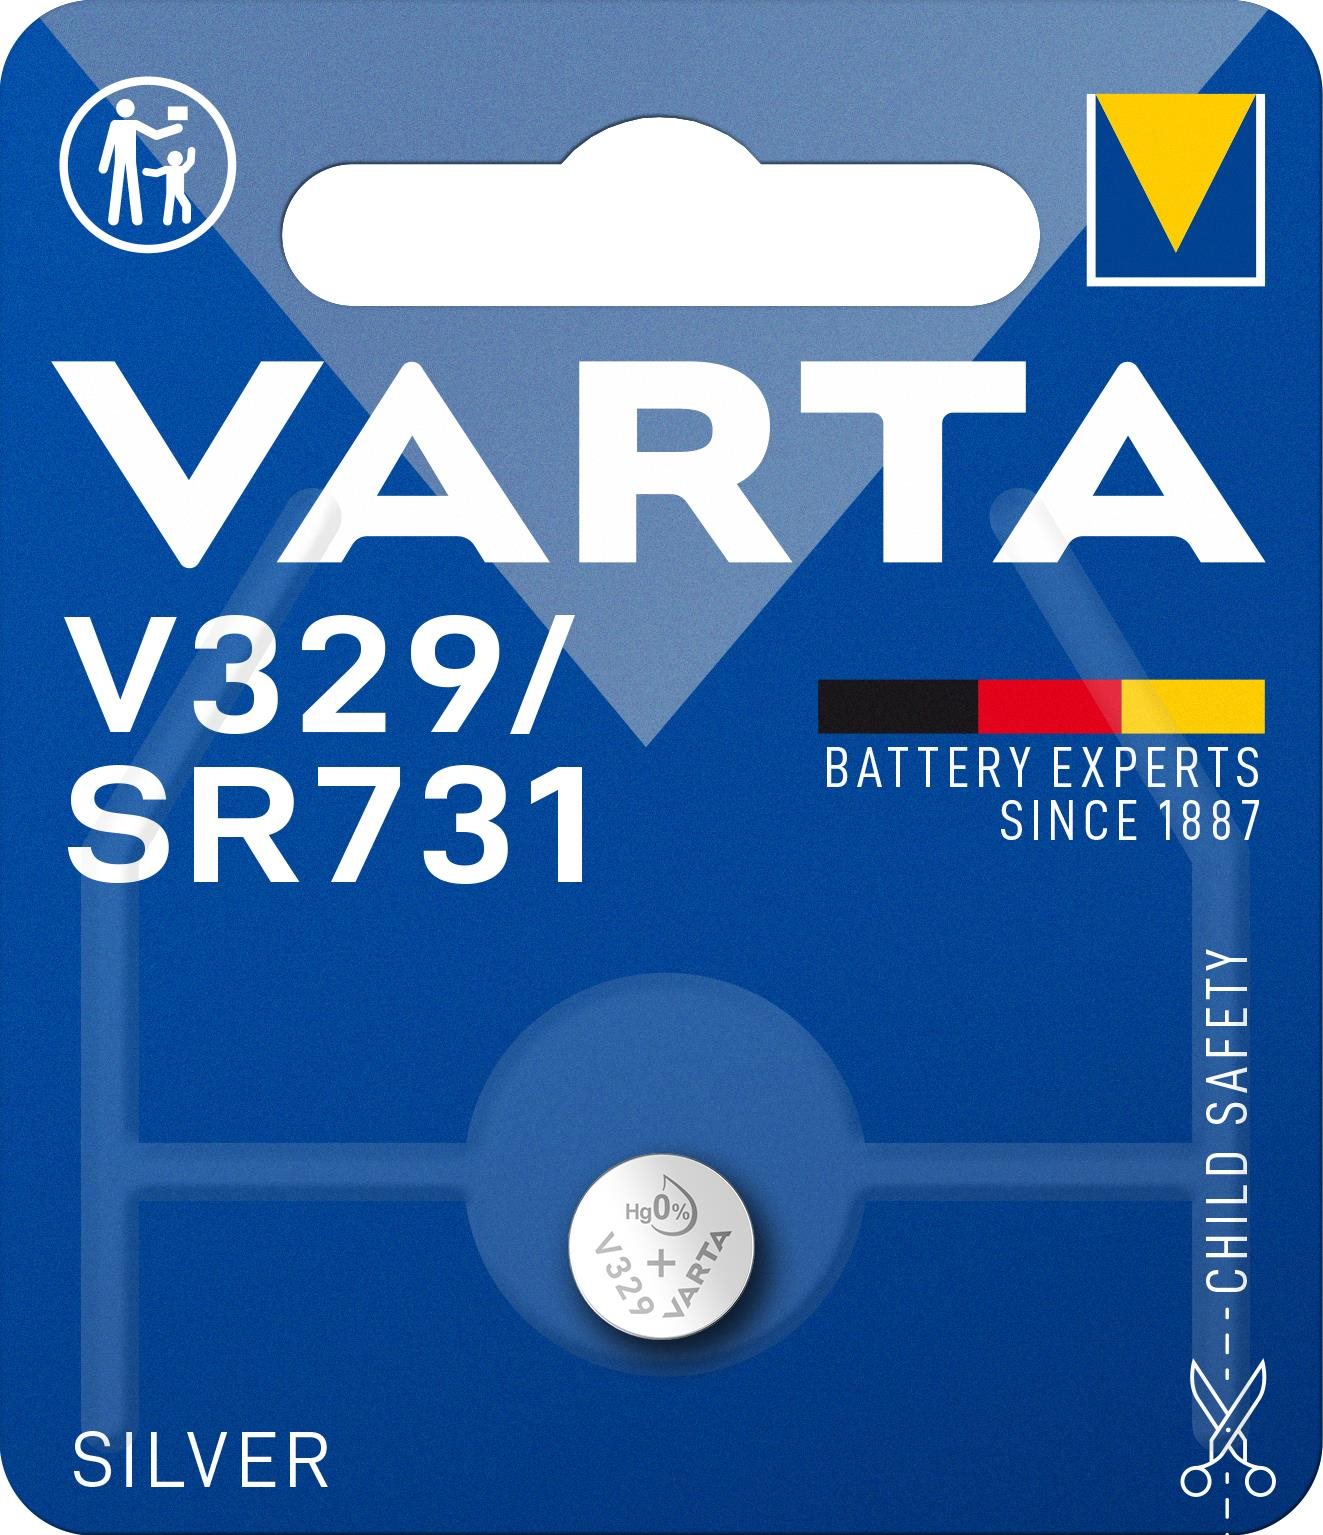 VARTA V329/SR731 Speciális ezüst-oxid elem - 1 db